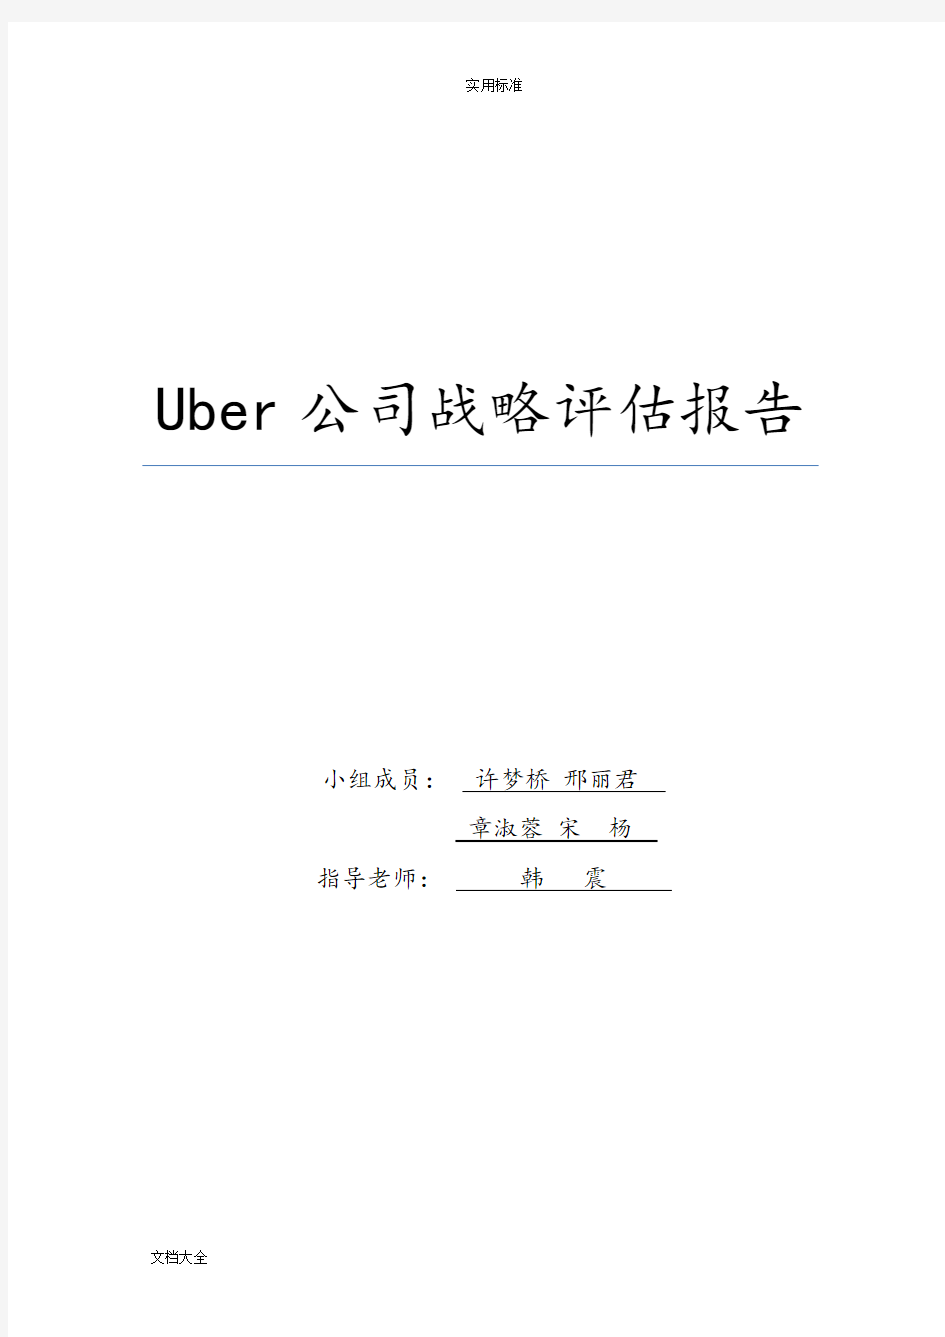 uber商业模式分析报告报告材料